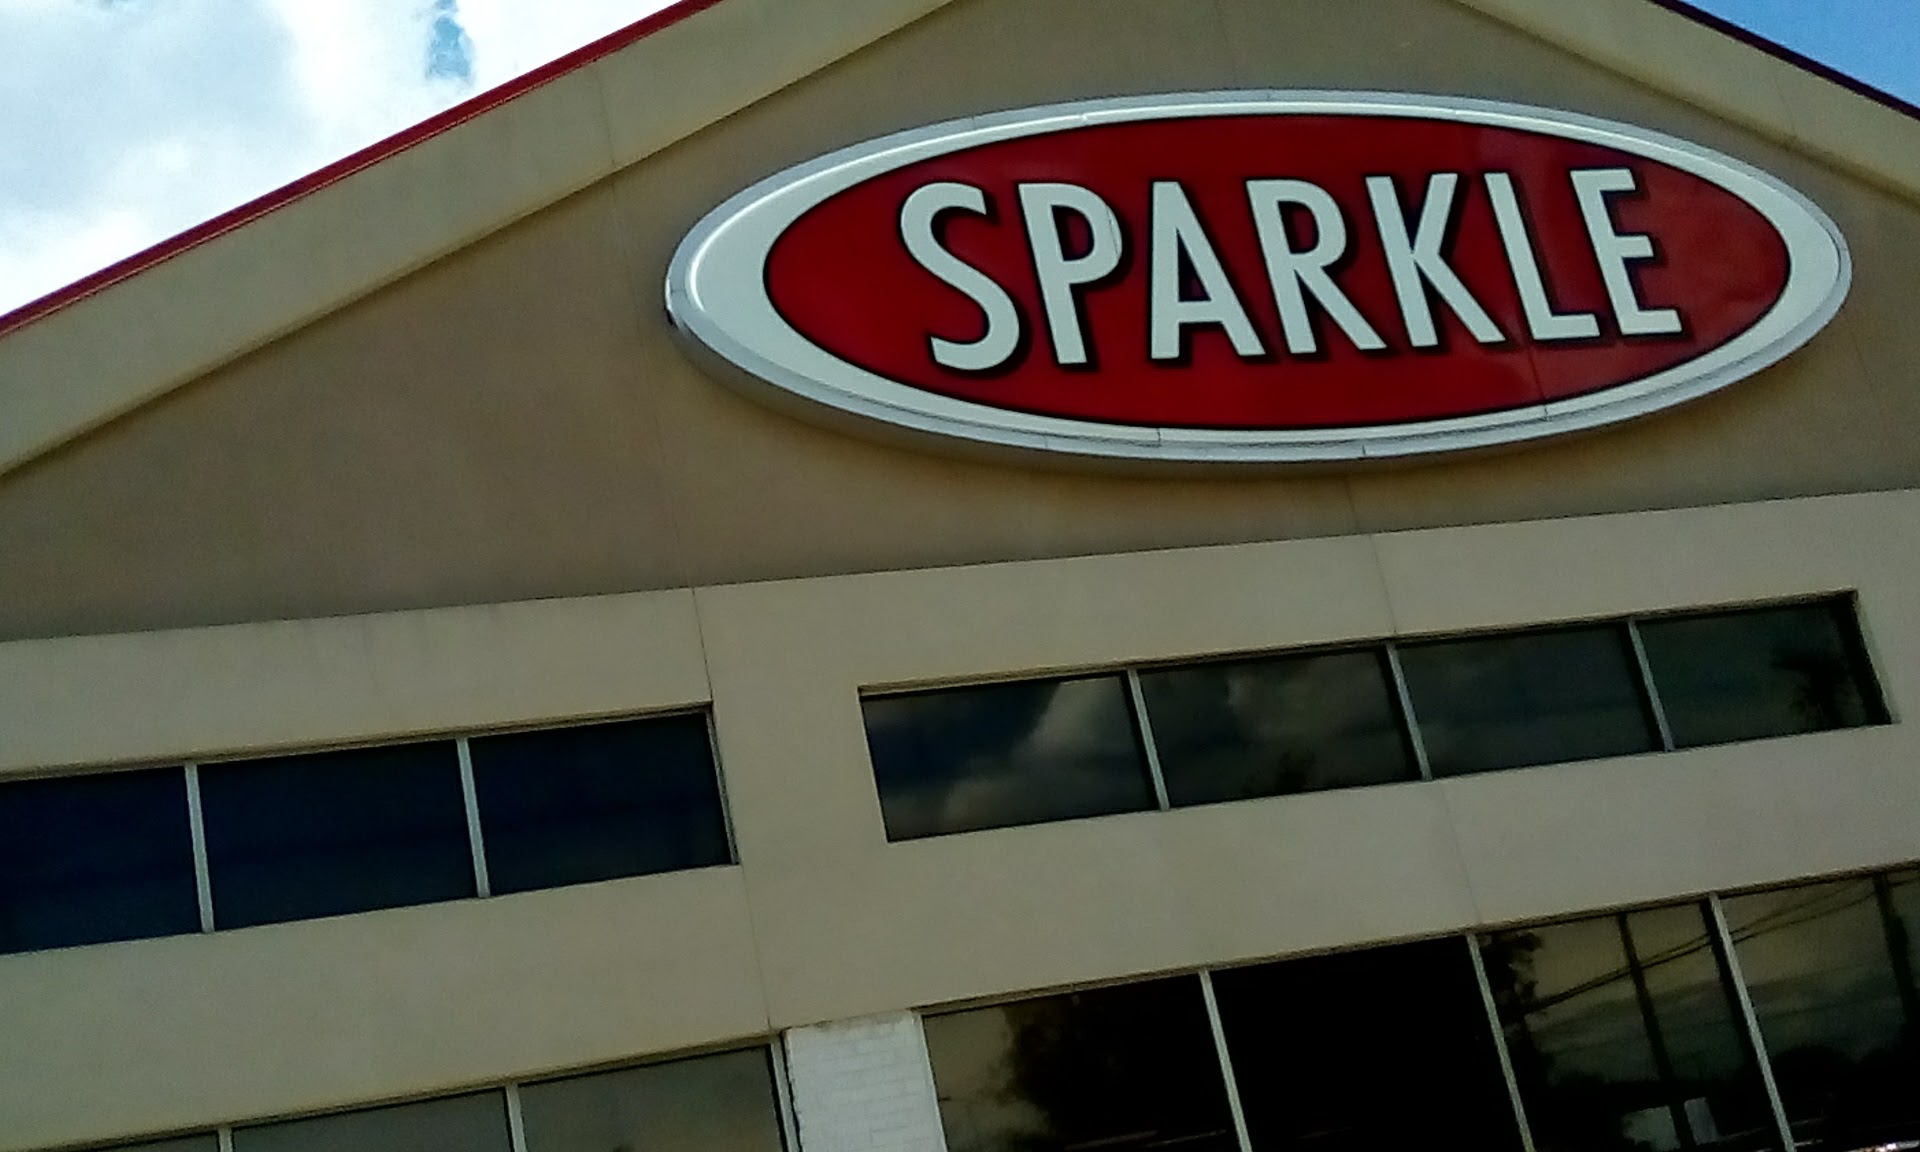 Sparkle Market